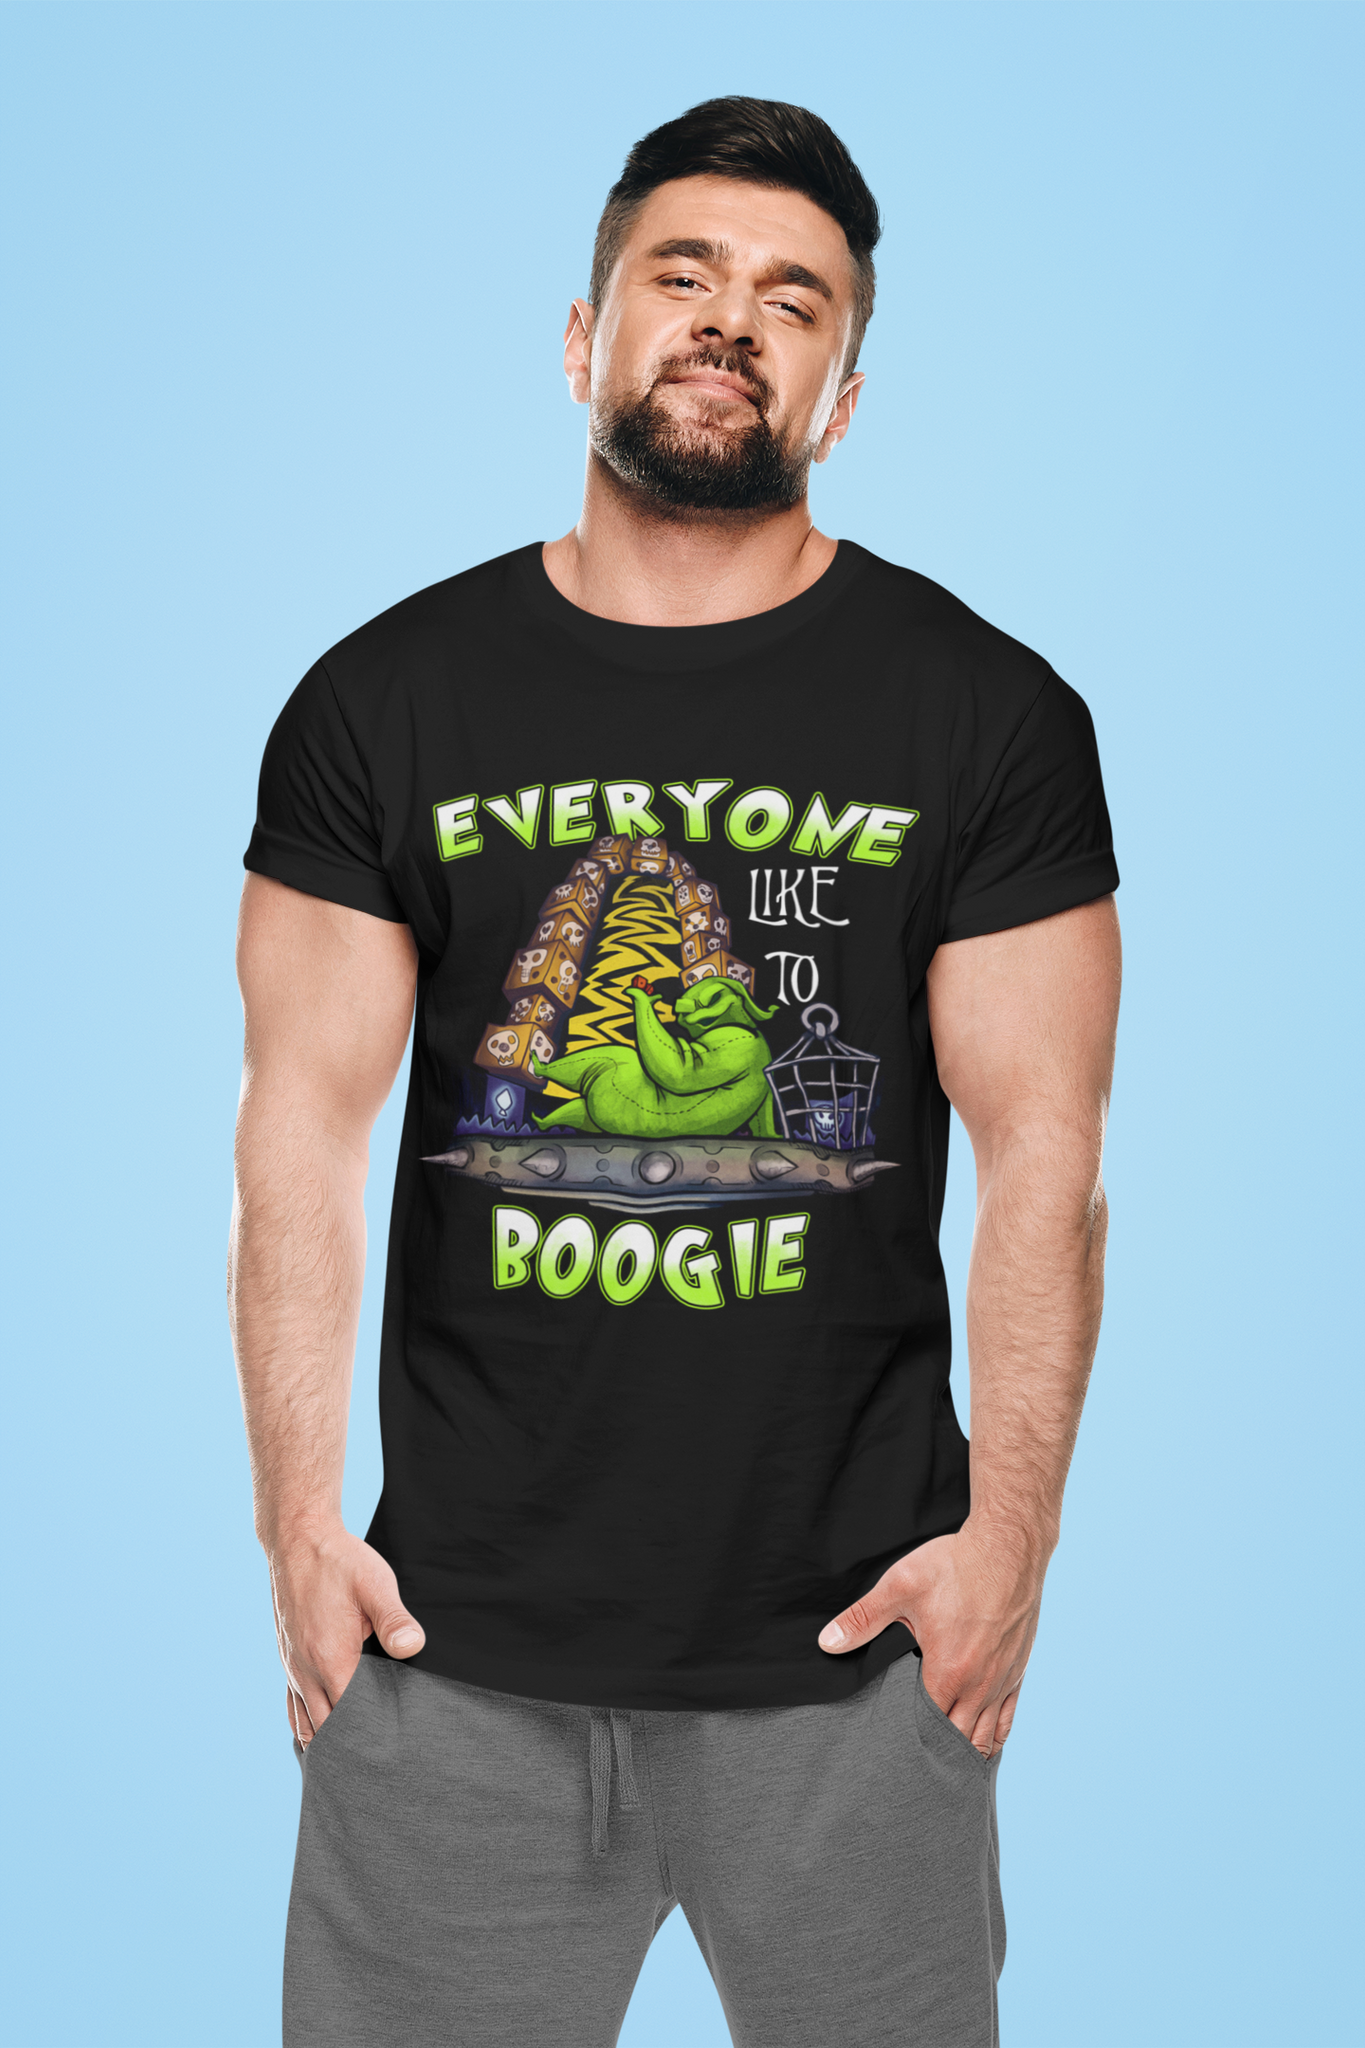 Nightmare Before Christmas T Shirt, Oogie Boogie T Shirt, Everyone Like To Boogie Tshirt, Halloween Gifts